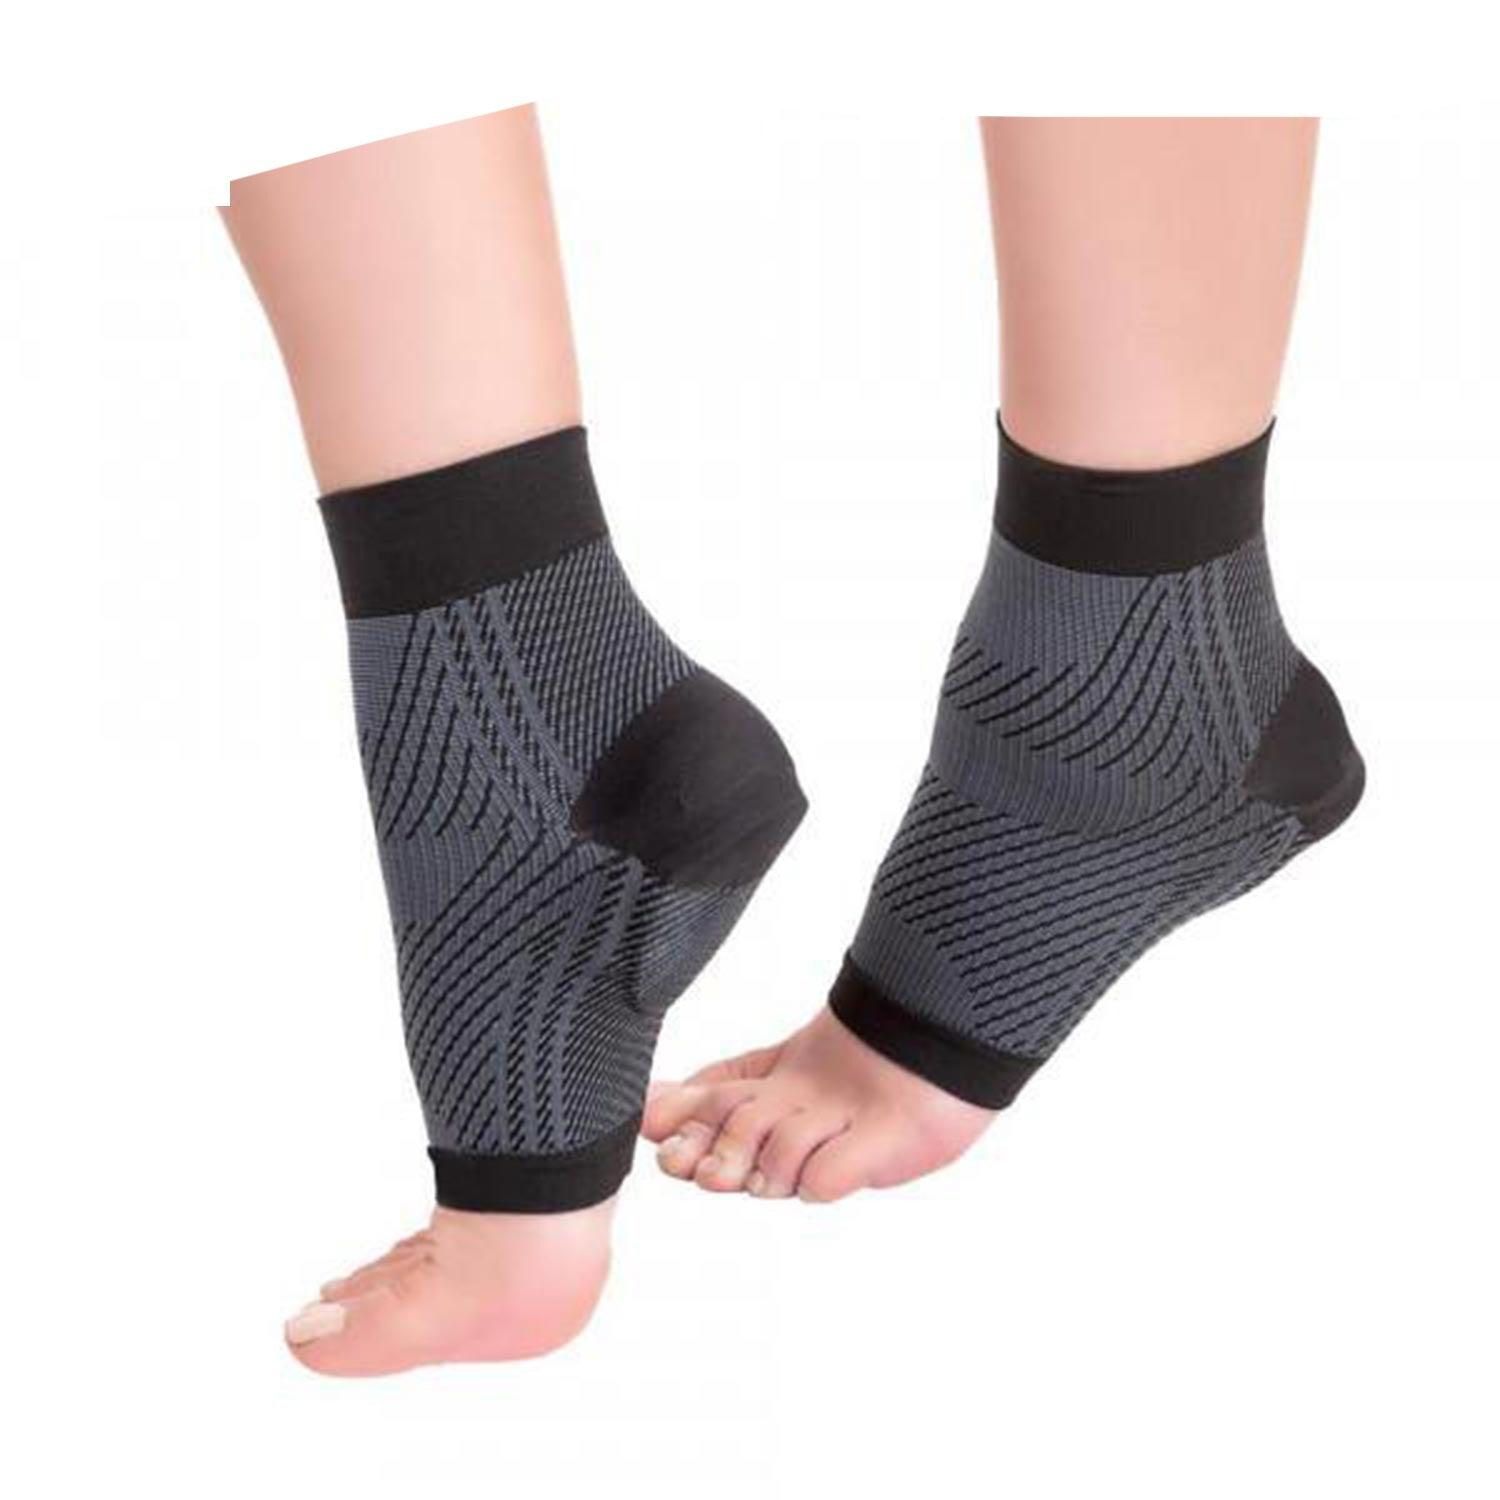 Heel / Arch Pain, Plantar Fasciitis Sensory Seamless Sock (Silicone Gel Heel Cup) - Anjelstore 